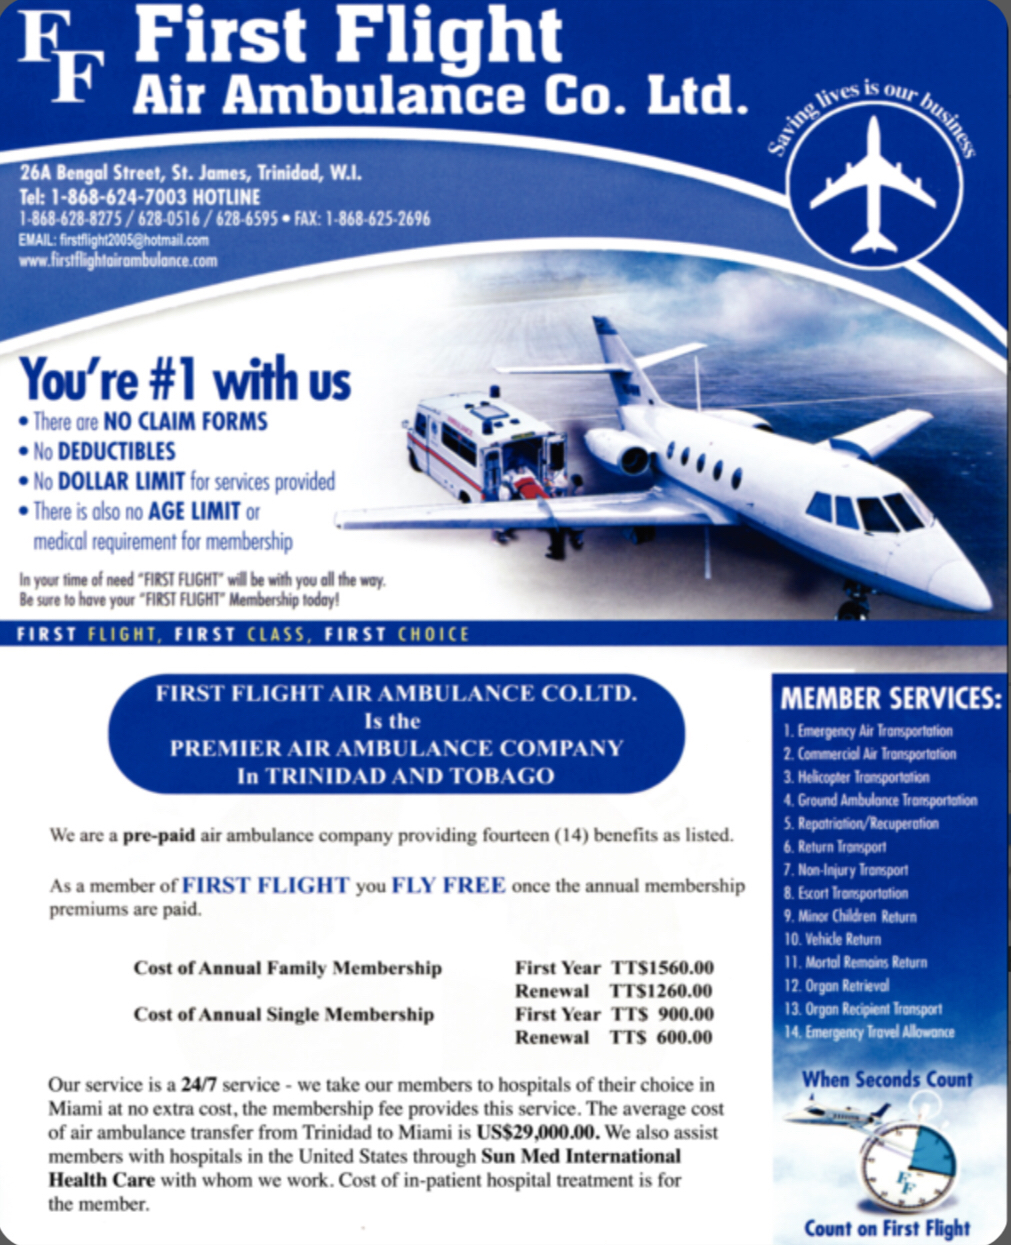 First Flight Air Ambulance Co Ltd - AIR AMBULANCE